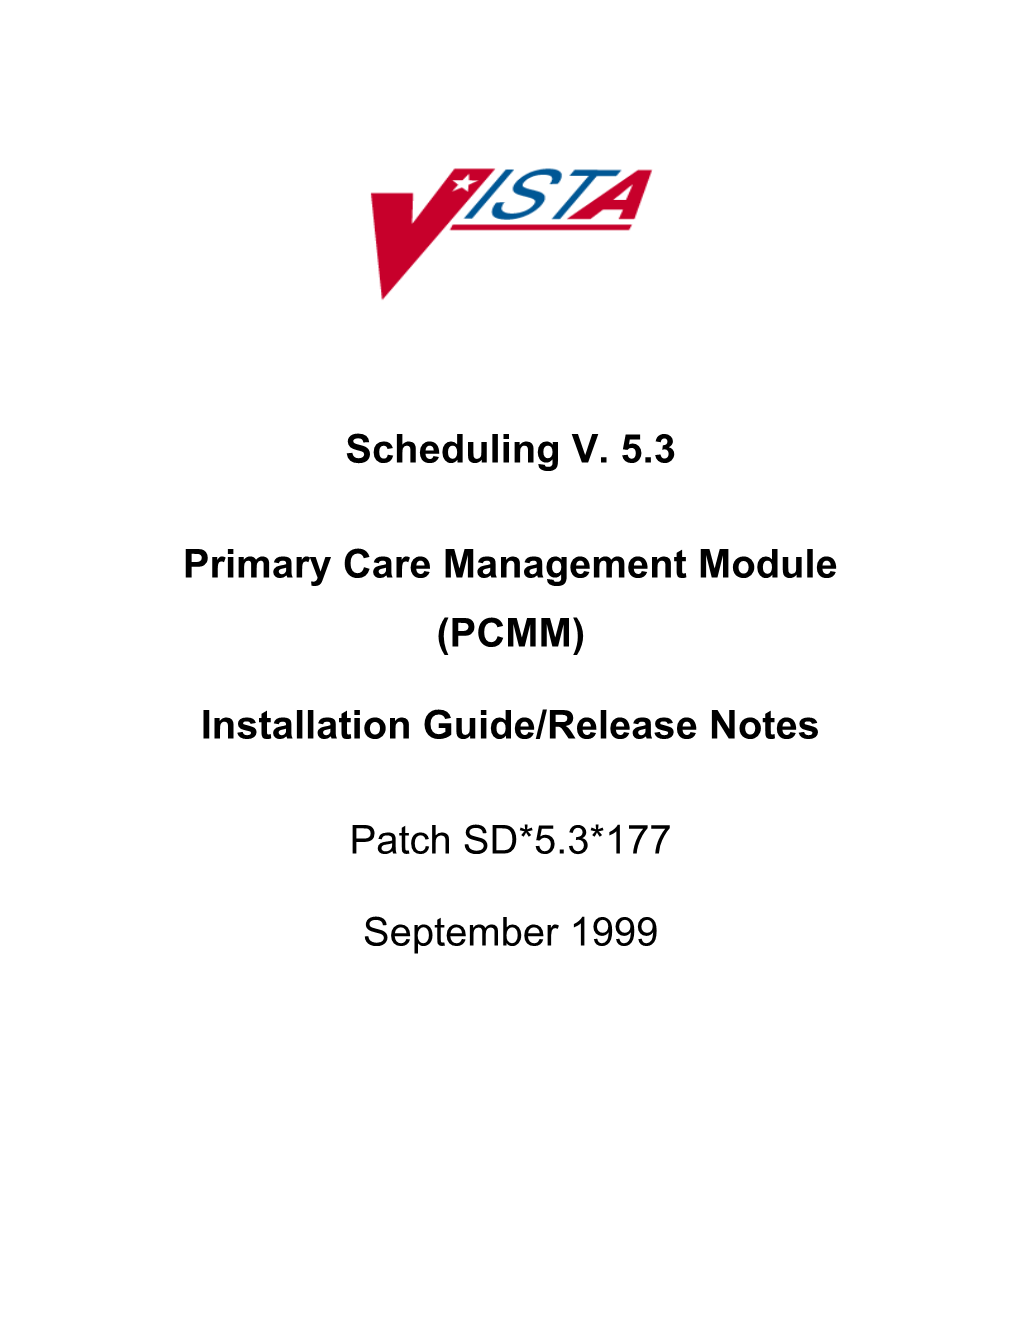 Primary Care Management Module